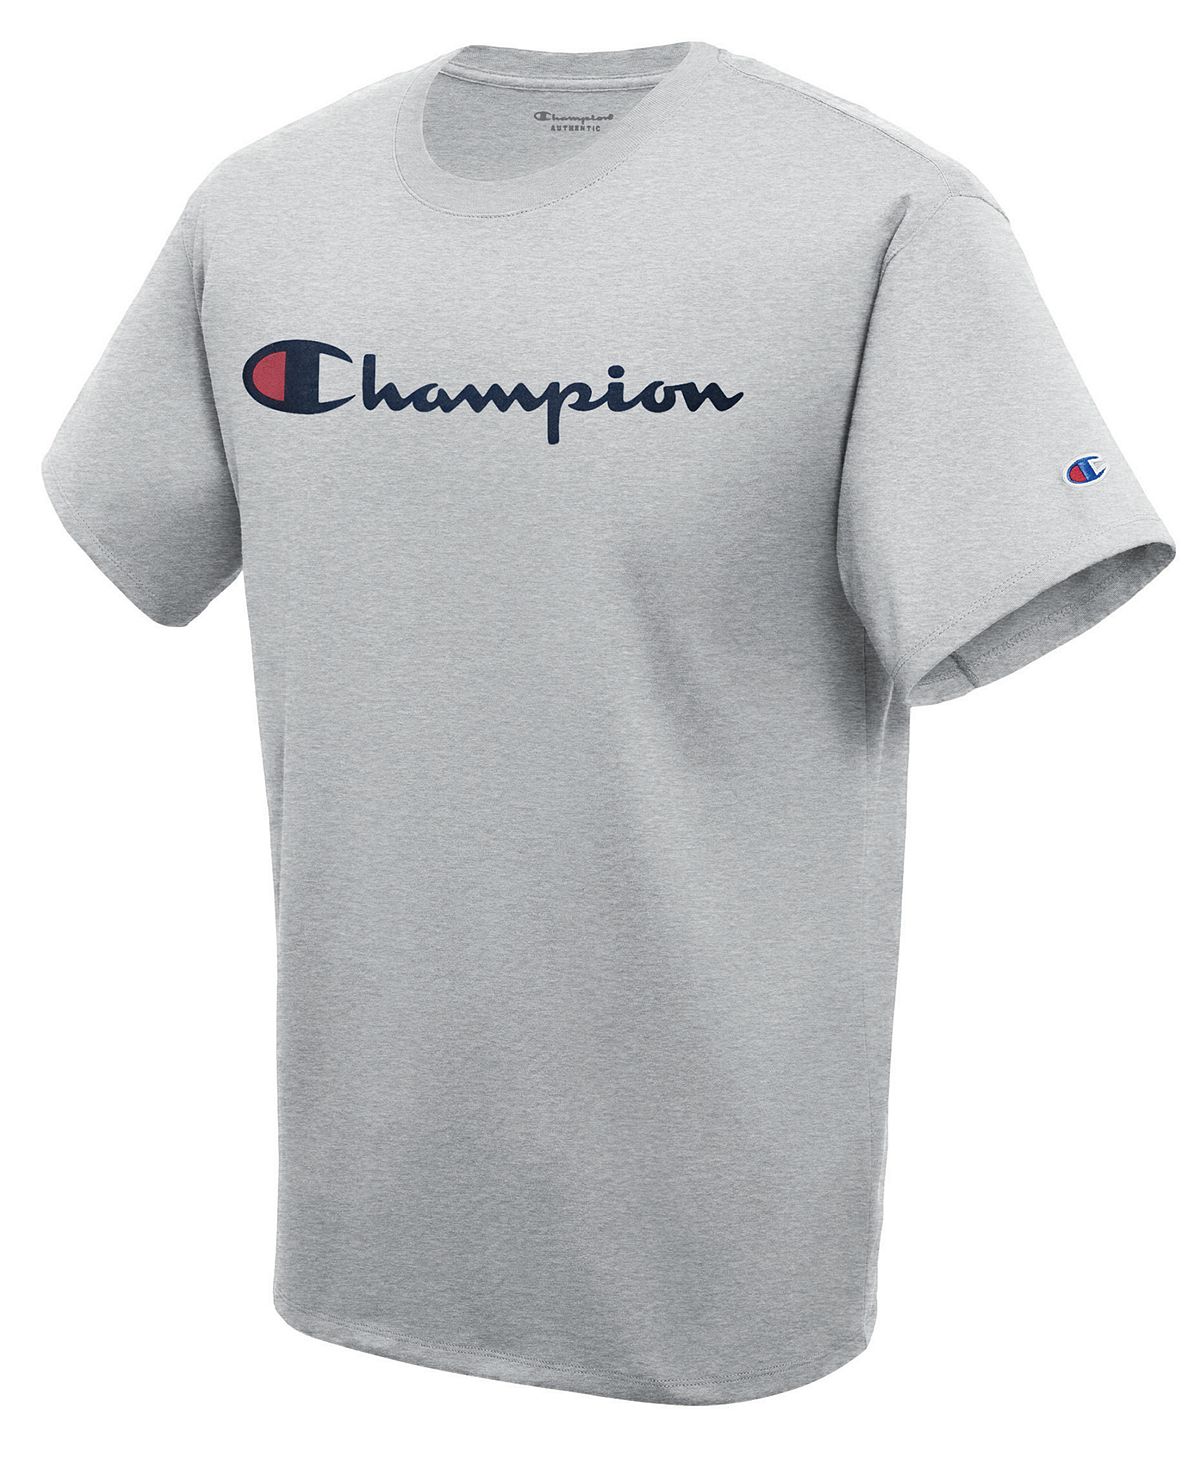 Мужская футболка с логотипом Champion